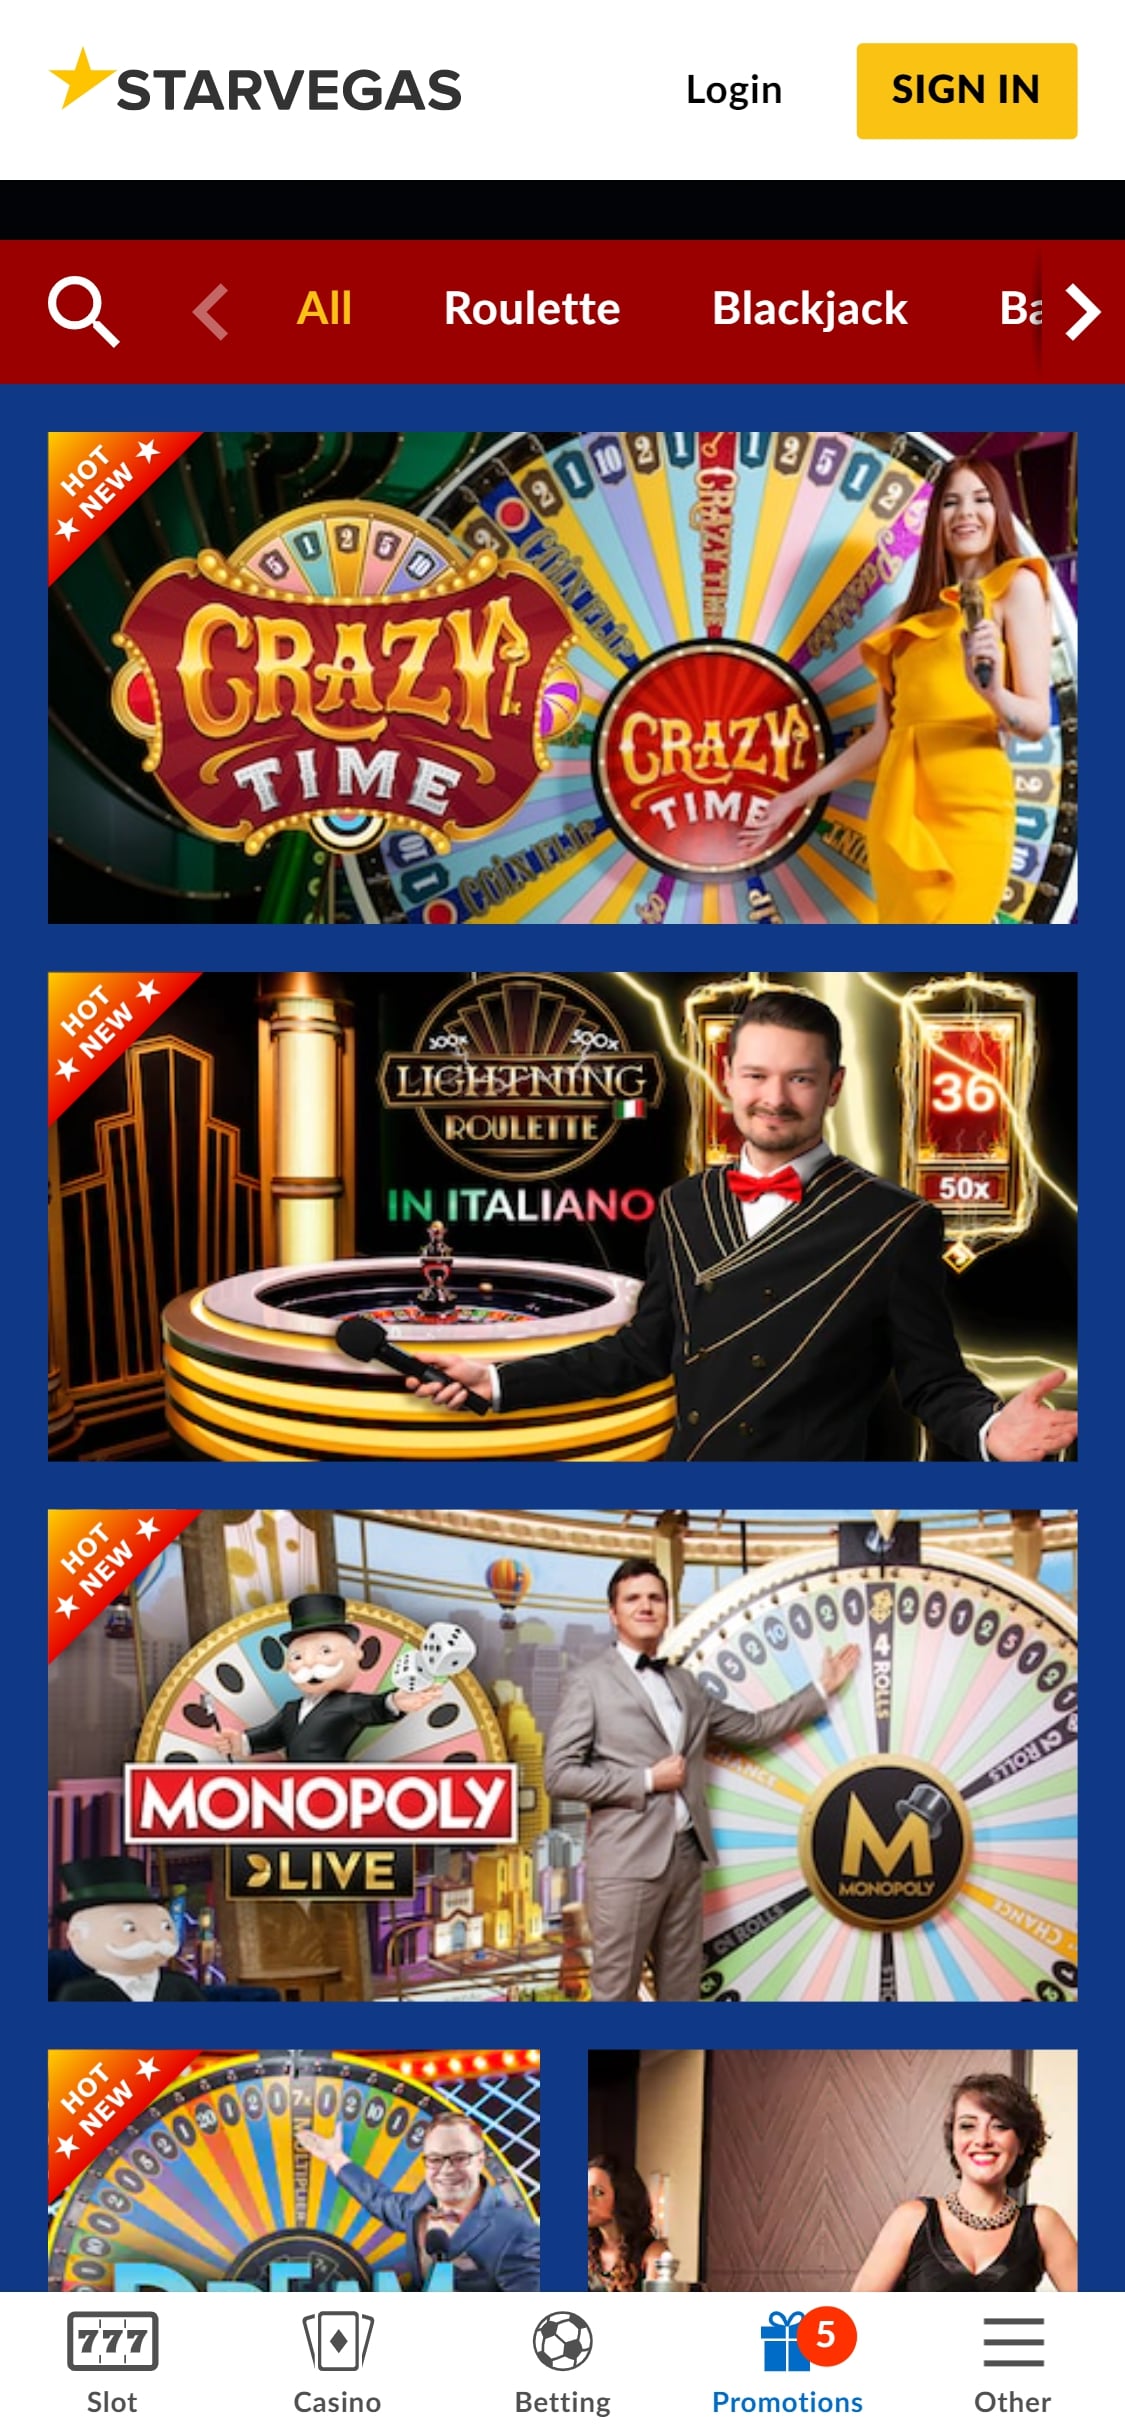 StarVegas Casino Mobile Live Dealer Games Review